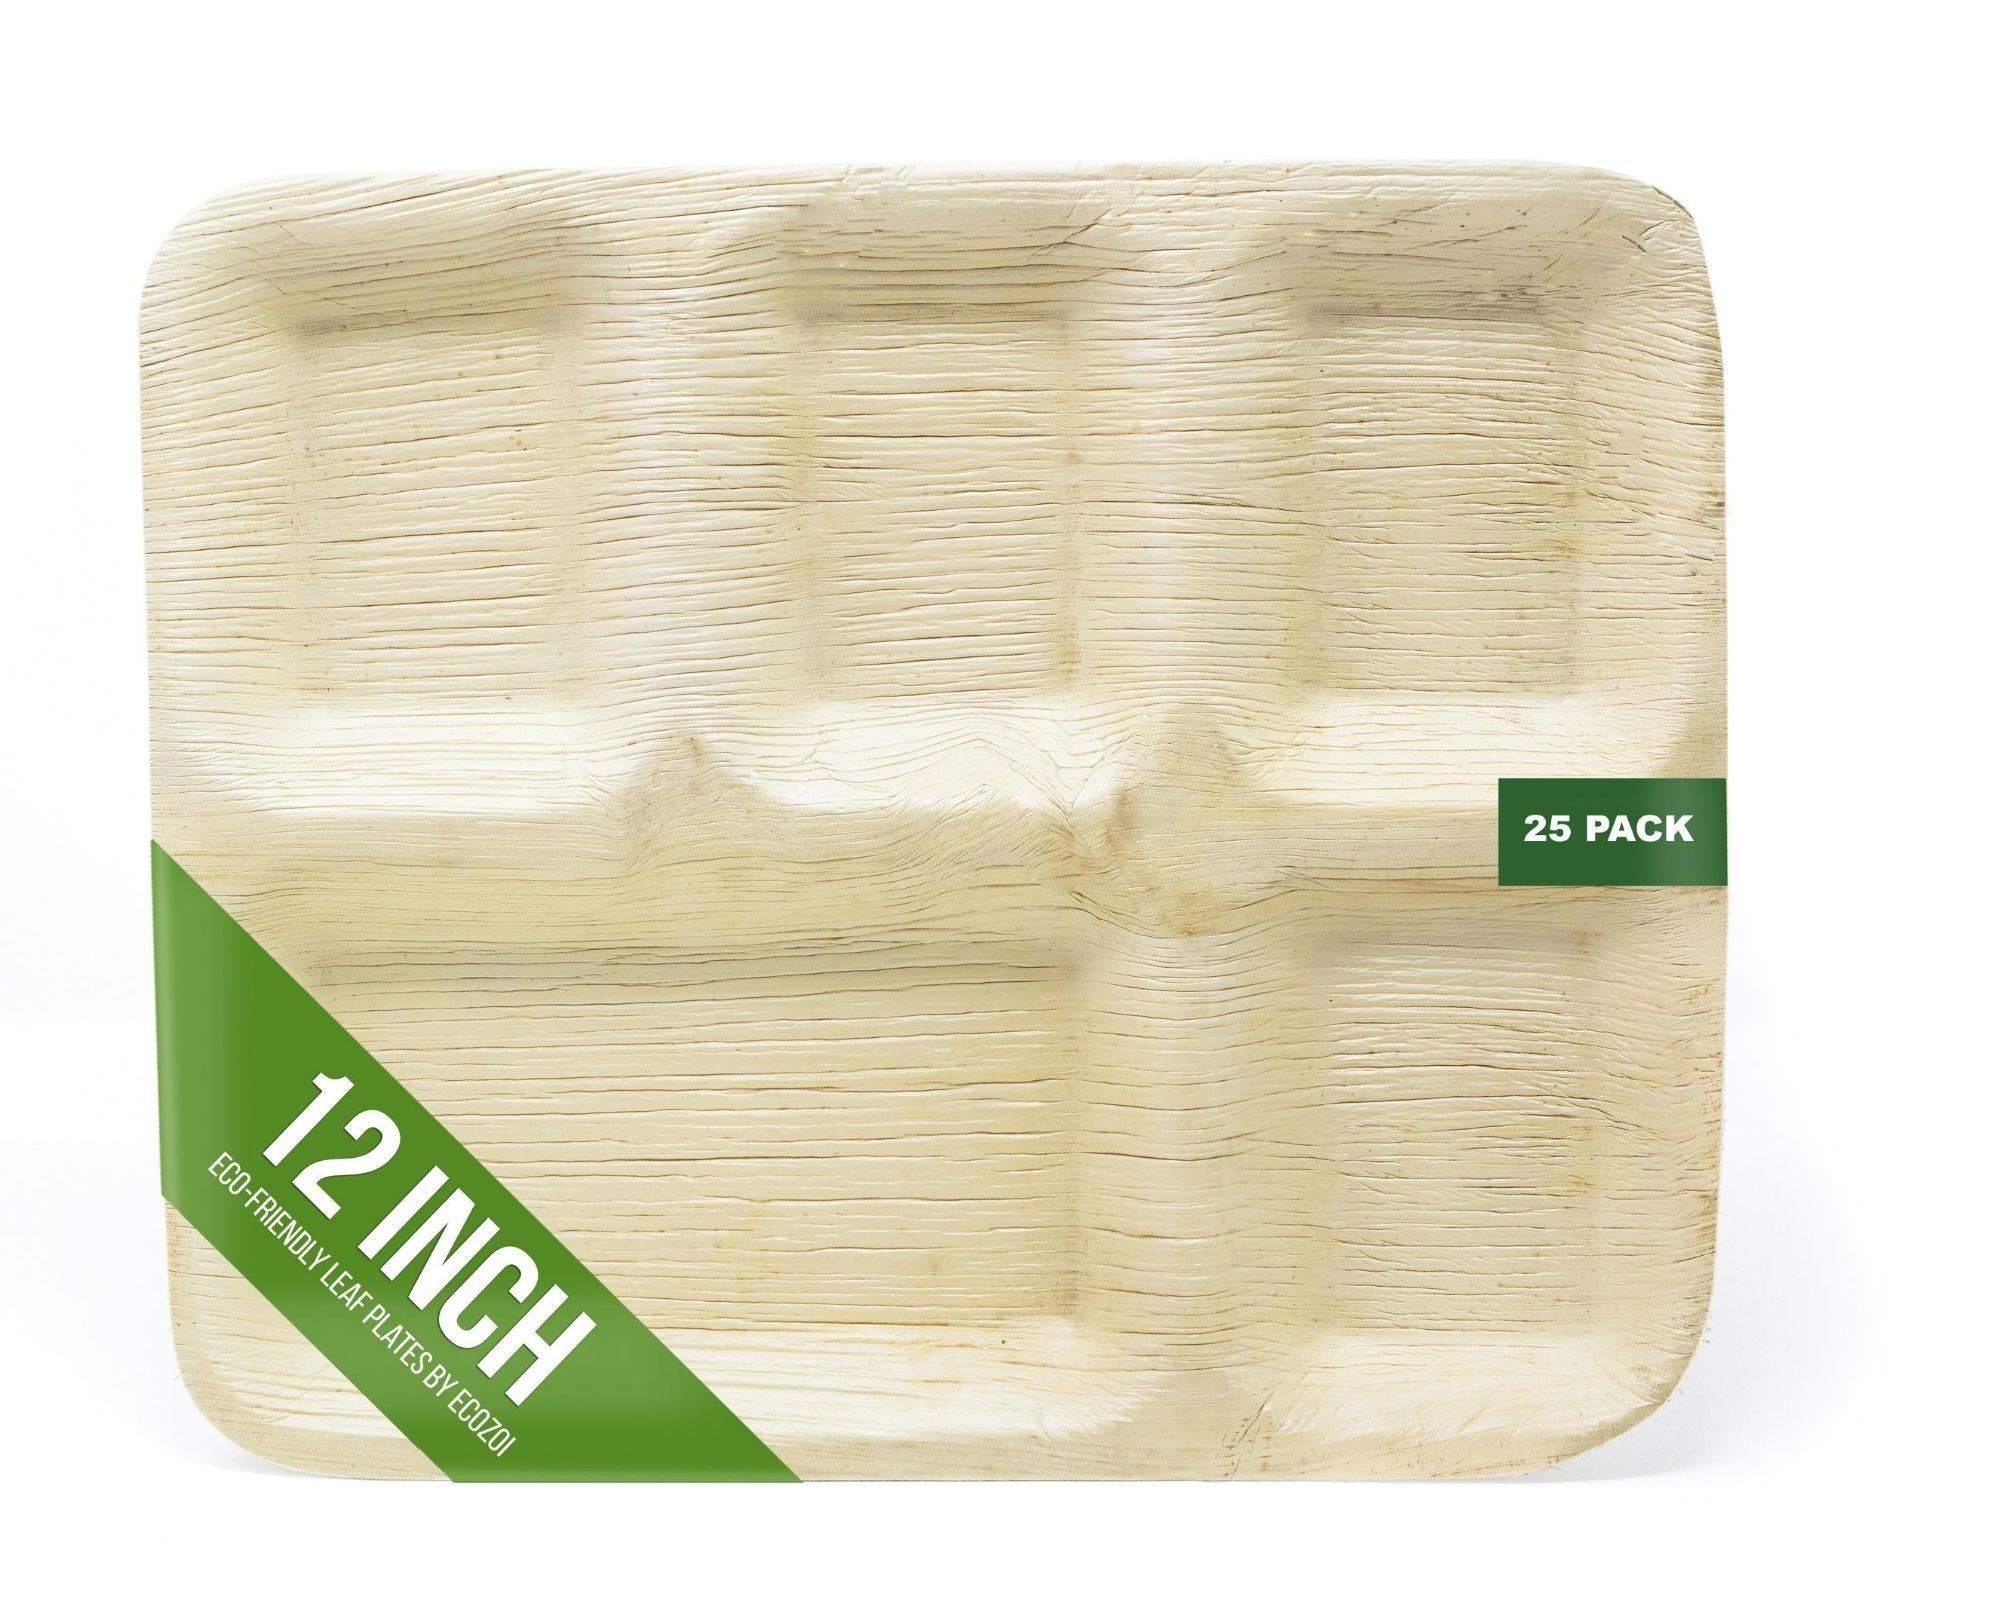 Disposable Palm Leaf Plates 12" Rectangle, 5 Compartments, 25 Pack Eco Dinnerware Set Disponible Plates Ecozoi 